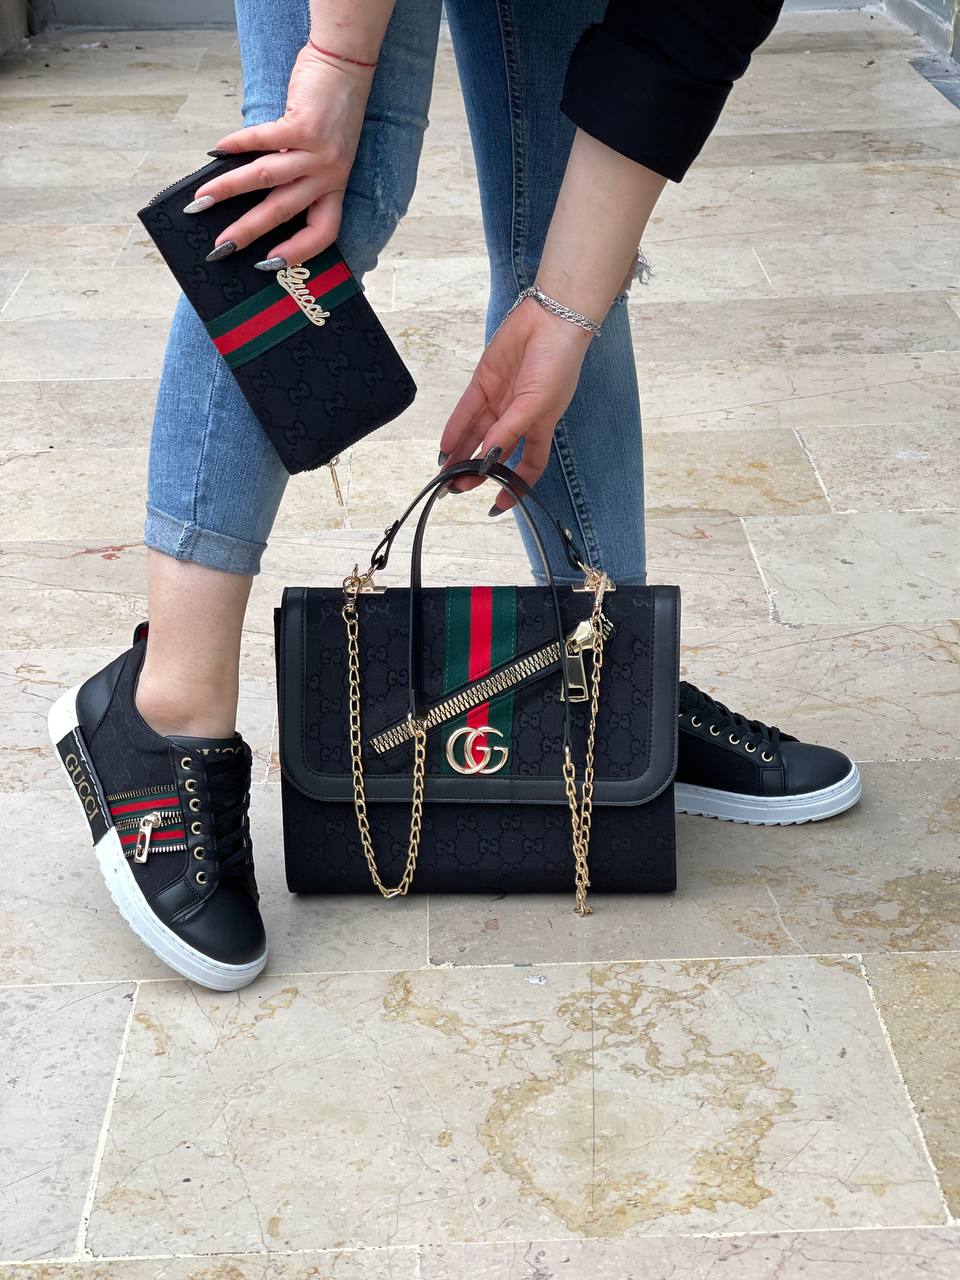 gucci vans sneakers and shoulder handbags with wallet